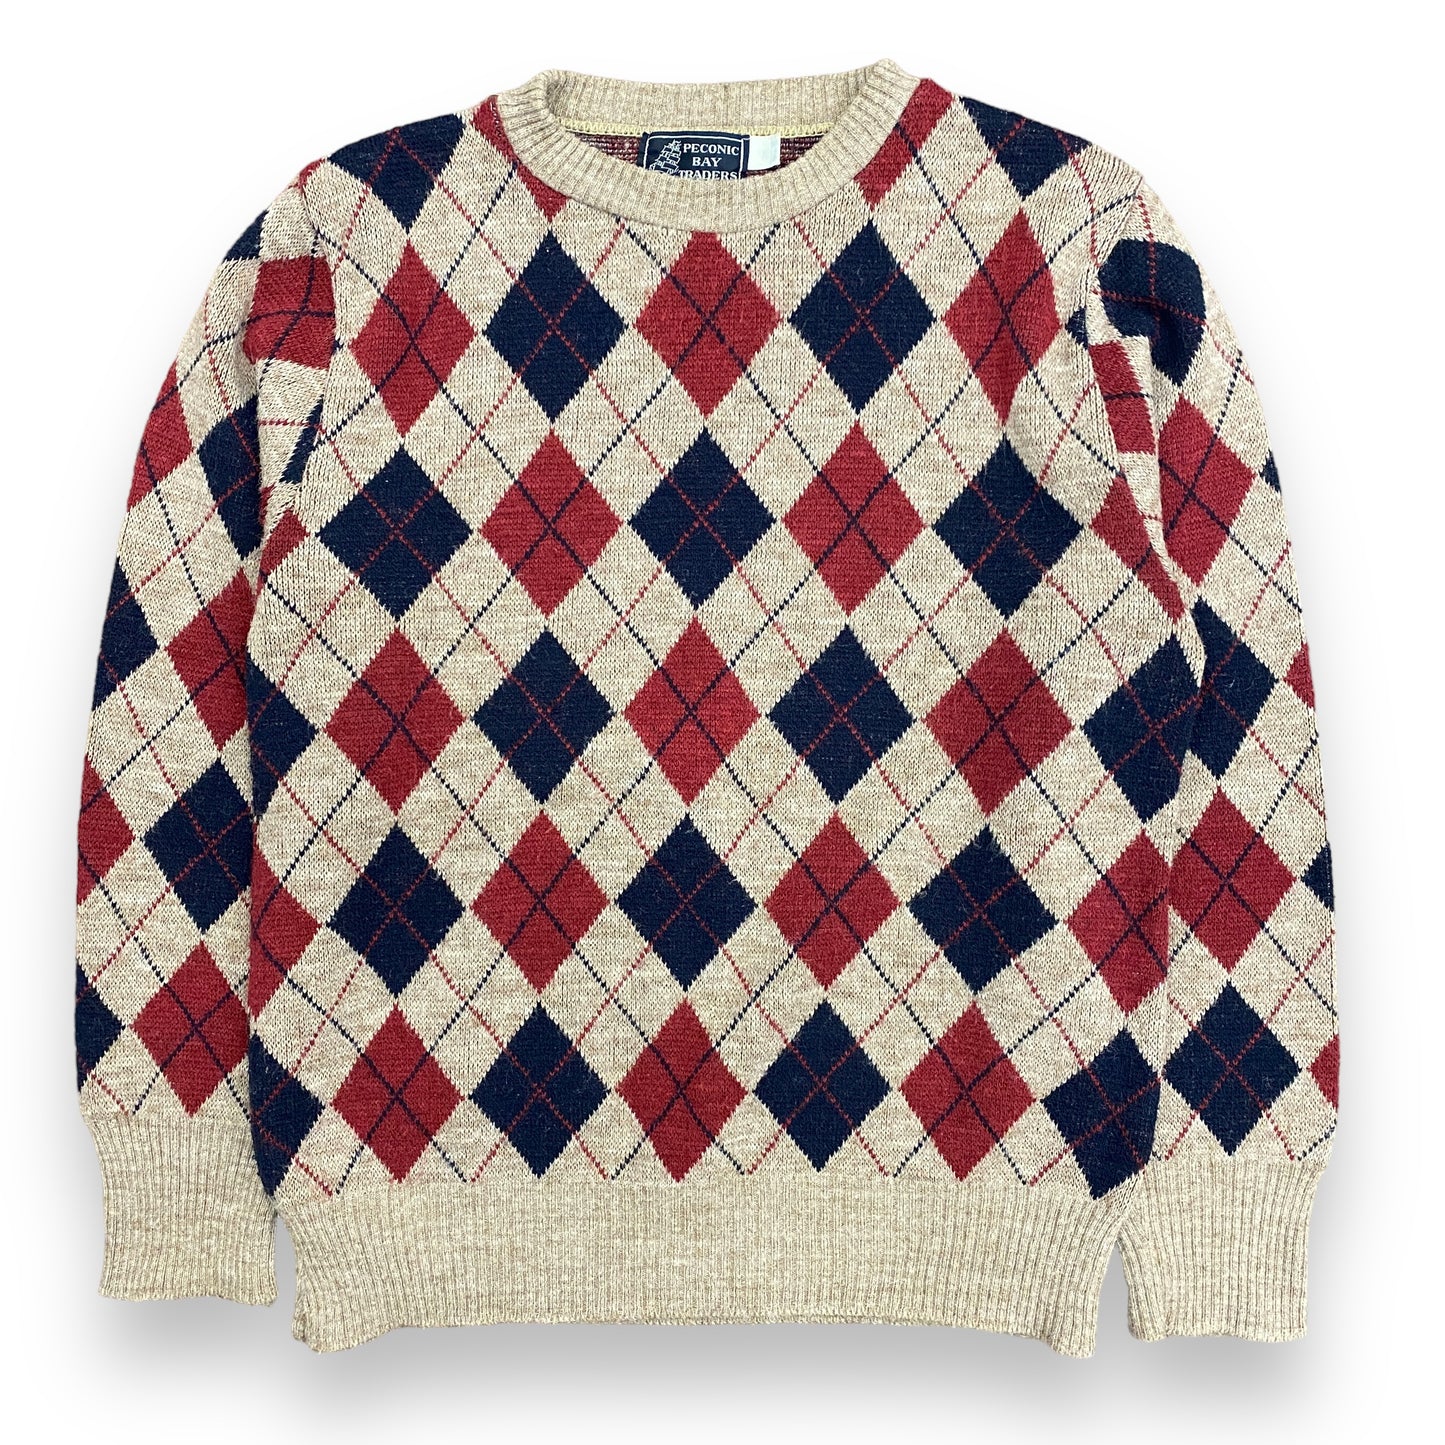 Vintage Peconic Bay Traders Argyle Knit Sweater - Size Medium